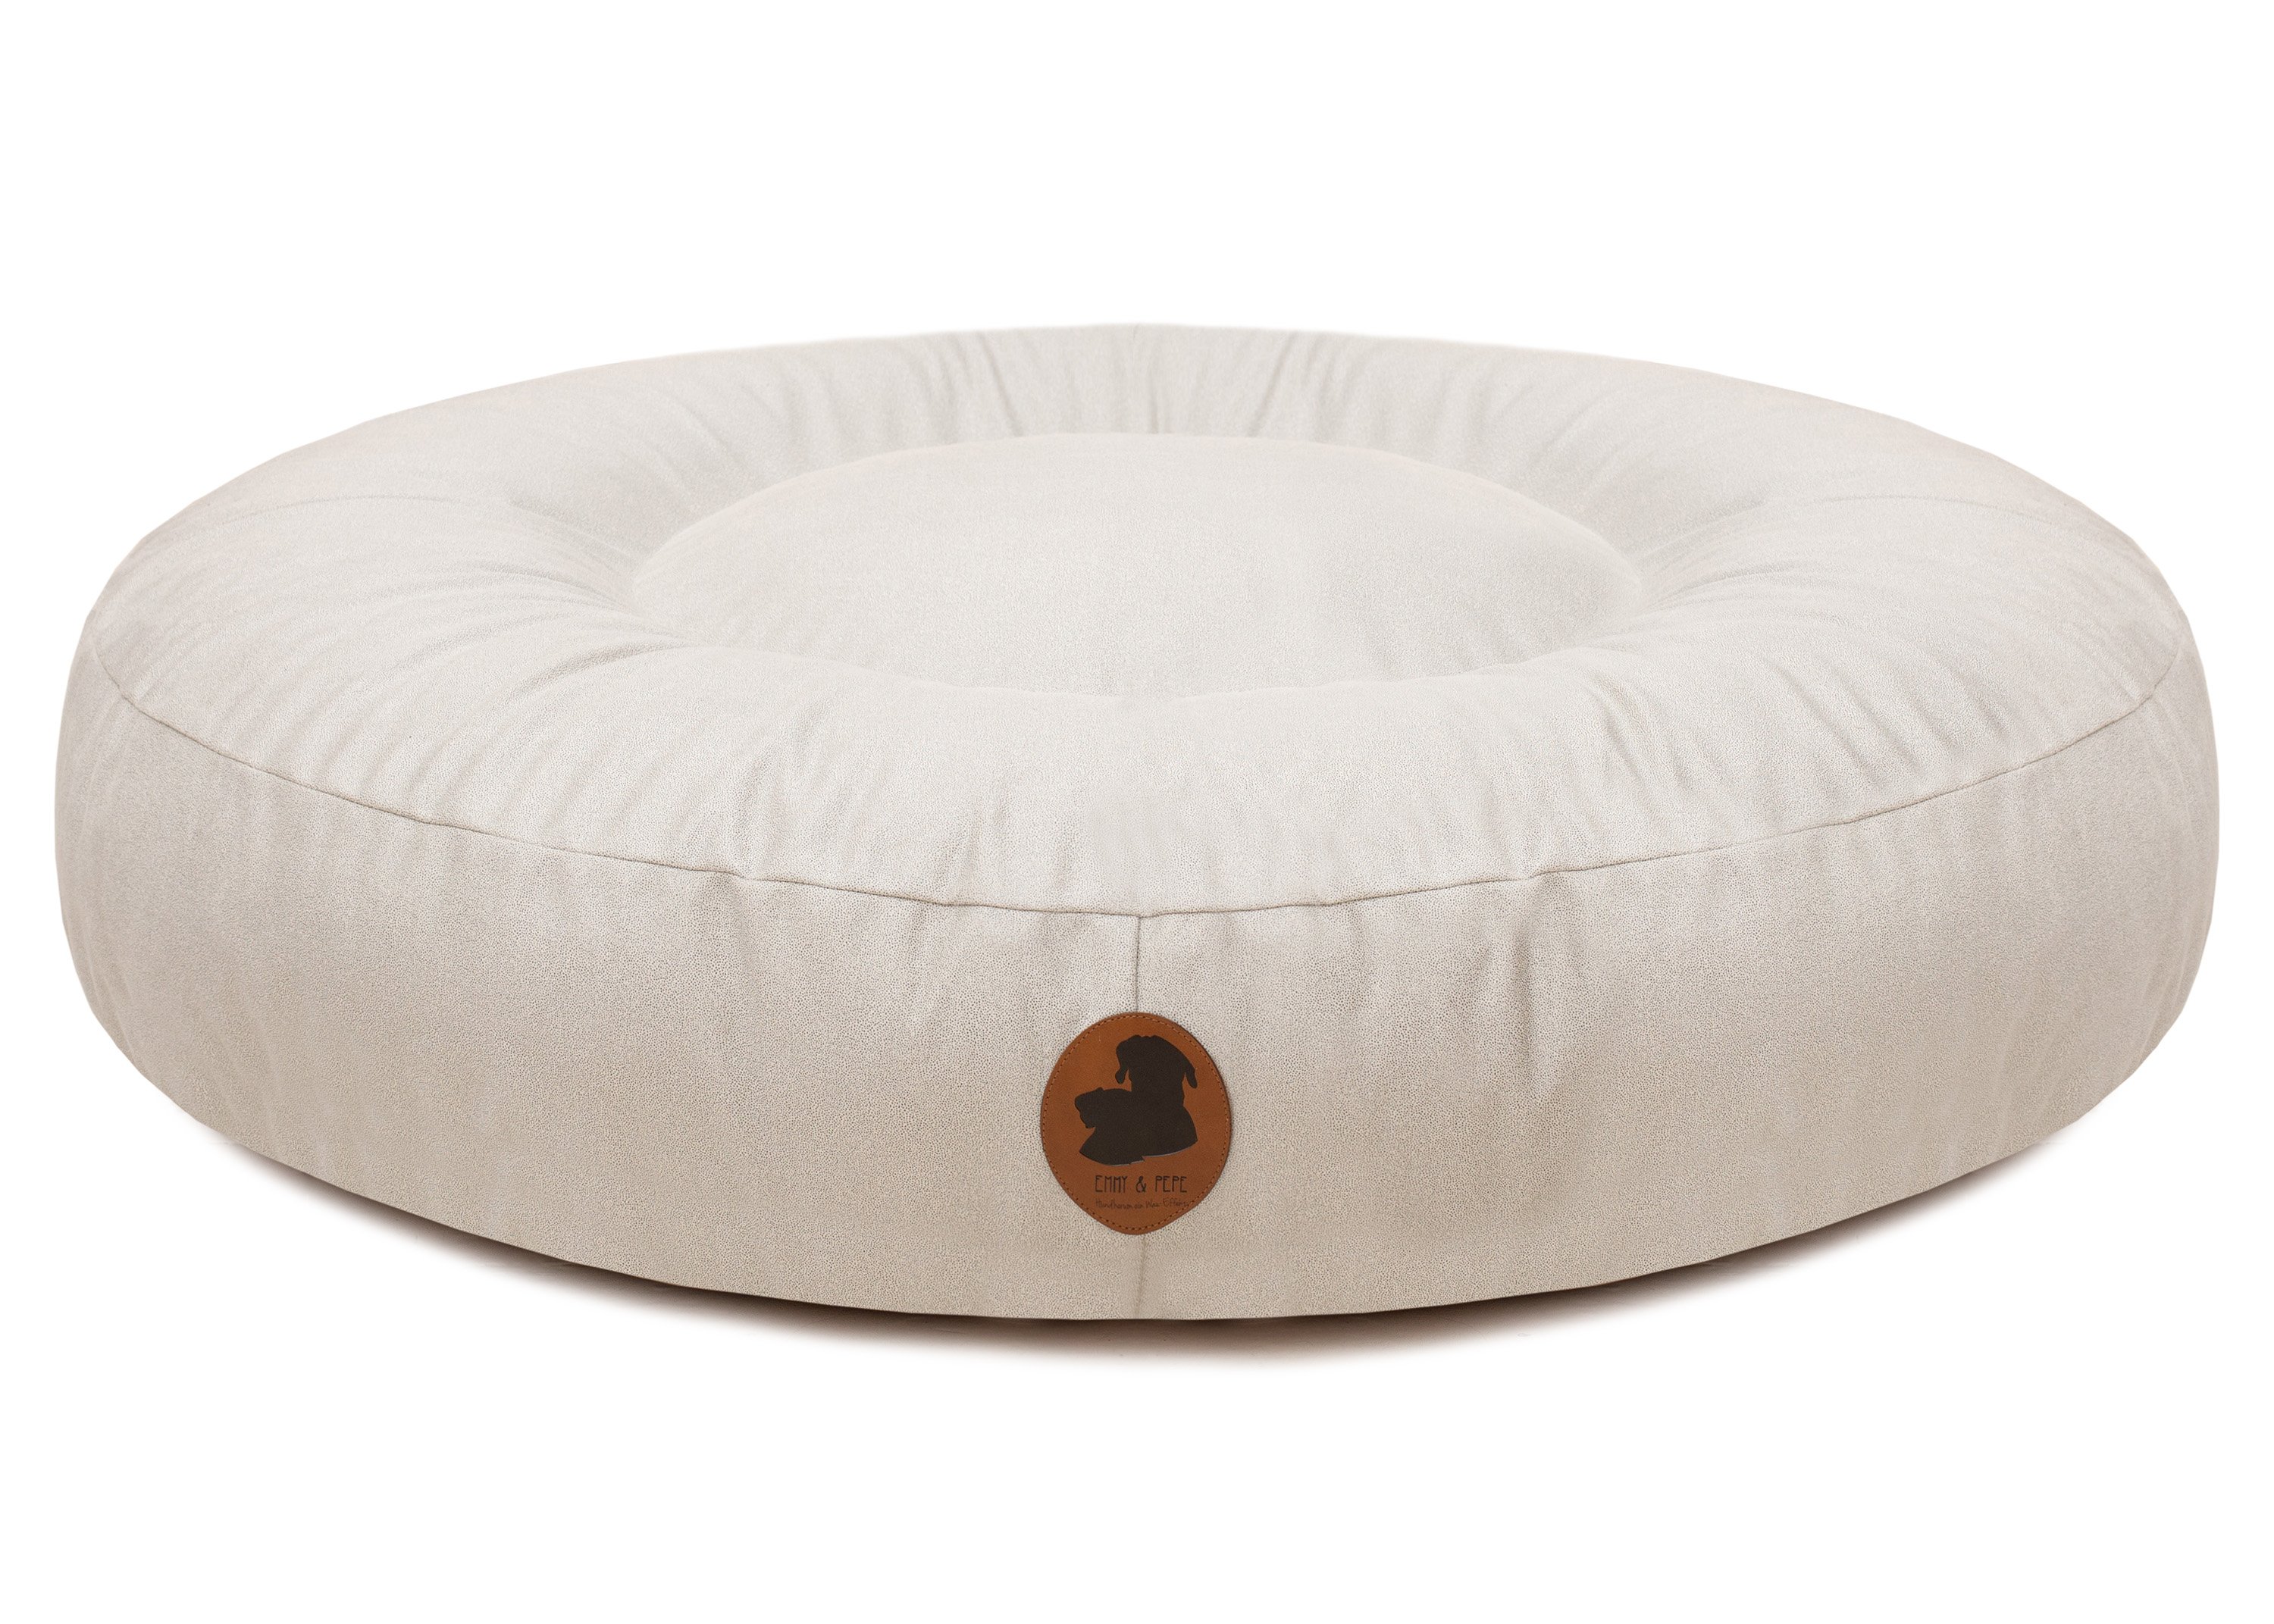 Wau-Bed Pets Friendly Creme Eckig-M (100x80cm)